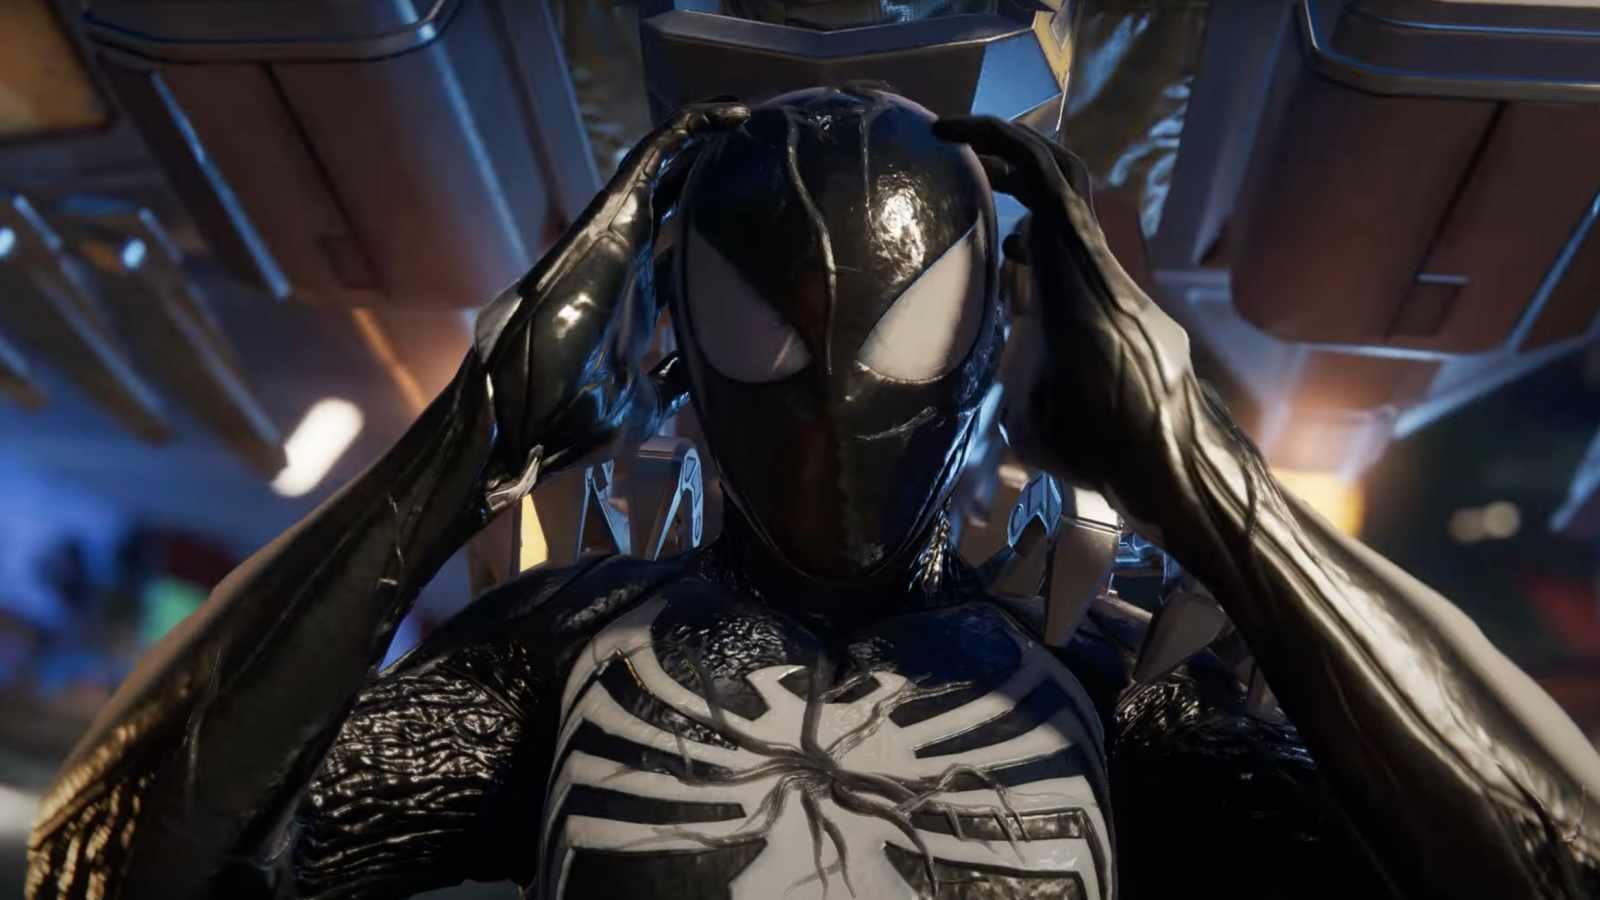 Marvel Spider-Man 2 Trailer Venom and Symbiote Suit Breakdown and